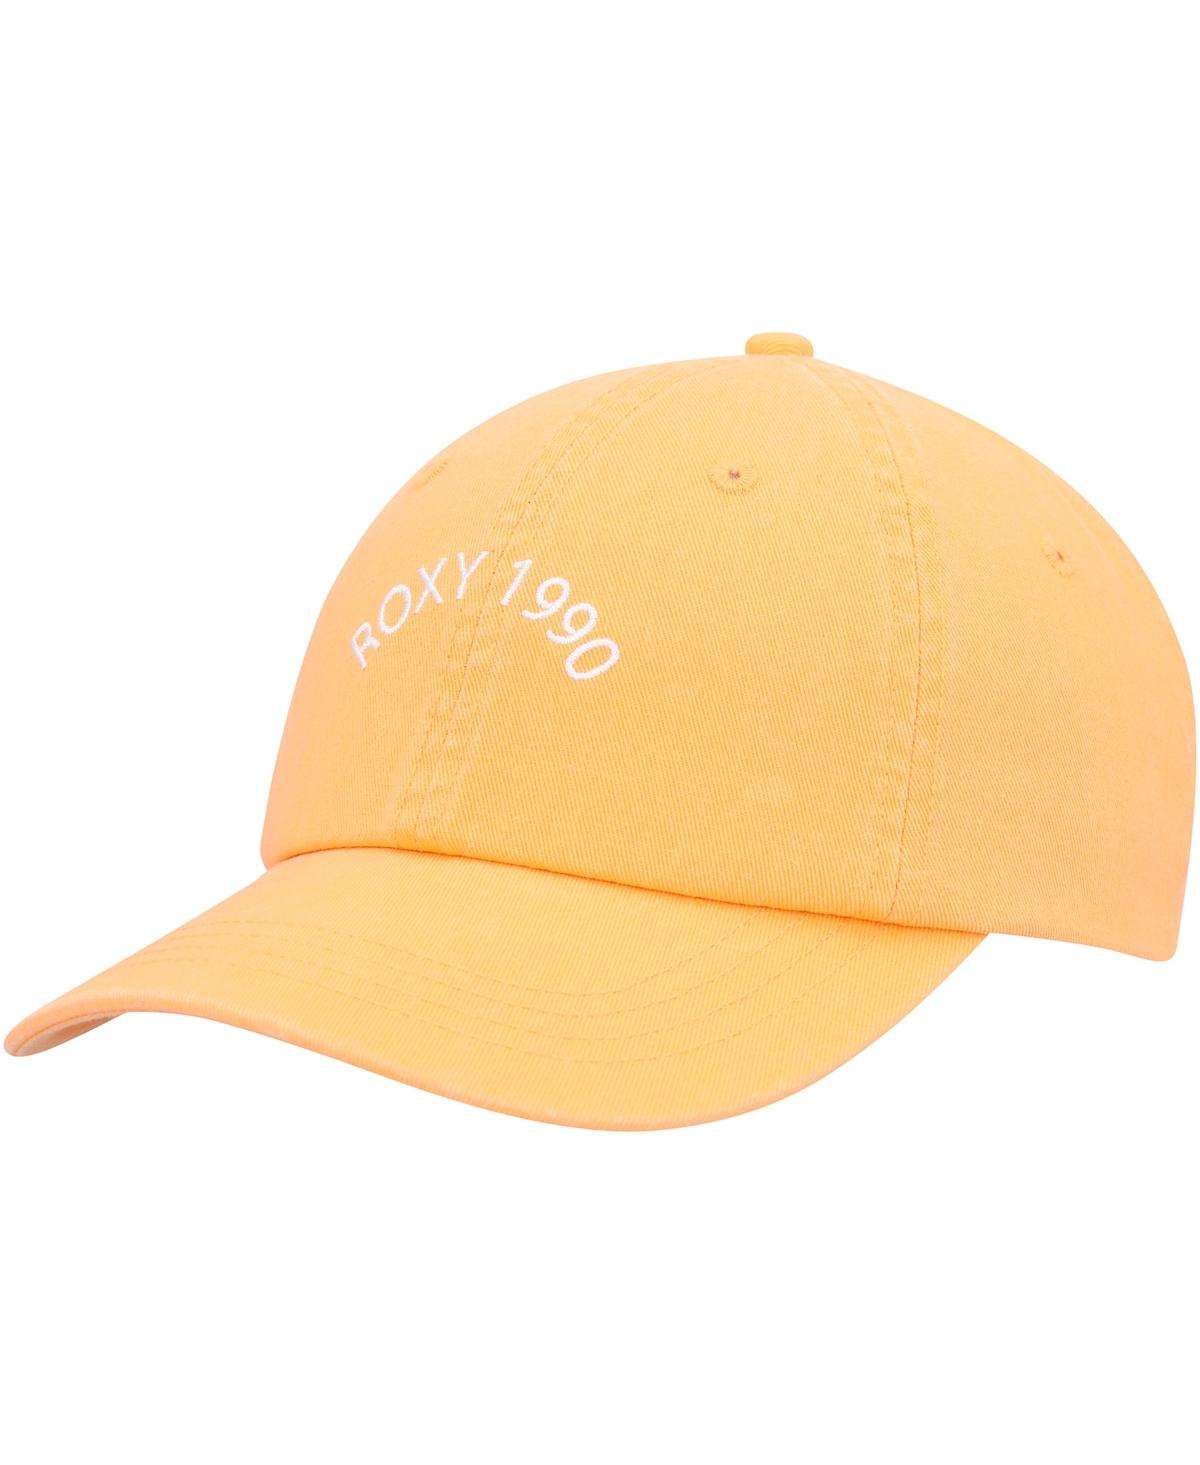 Women's Roxy Orange Toadstool Adjustable Hat - Orange